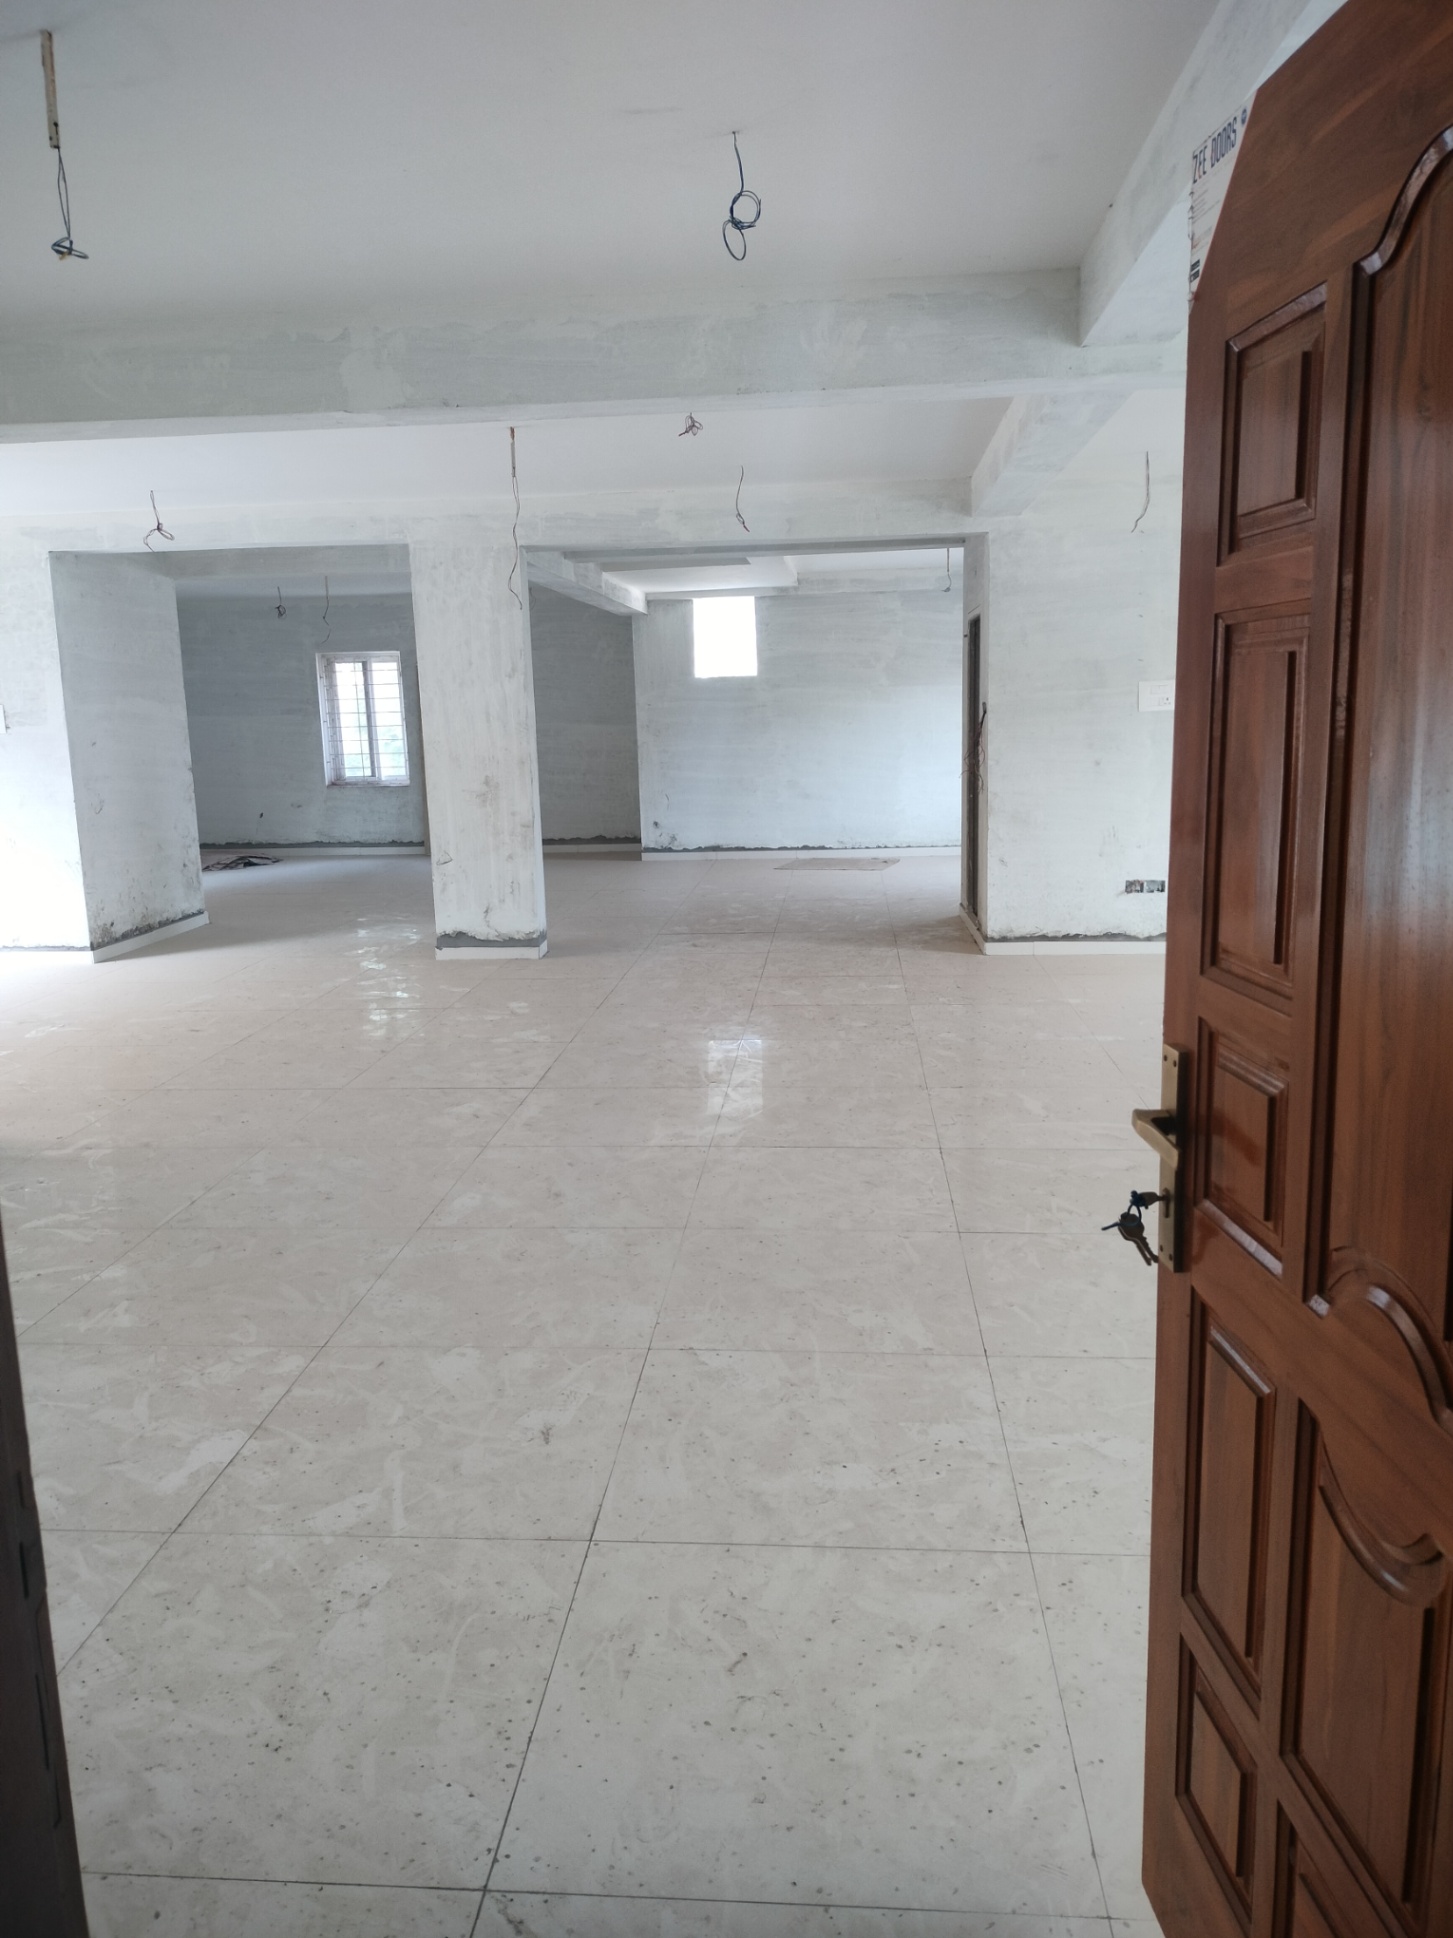 Rent Office/ Shop, 2600 sq ft carpet area, Semi Furnished for rent @Vijaywada,poranki,kcp colony 